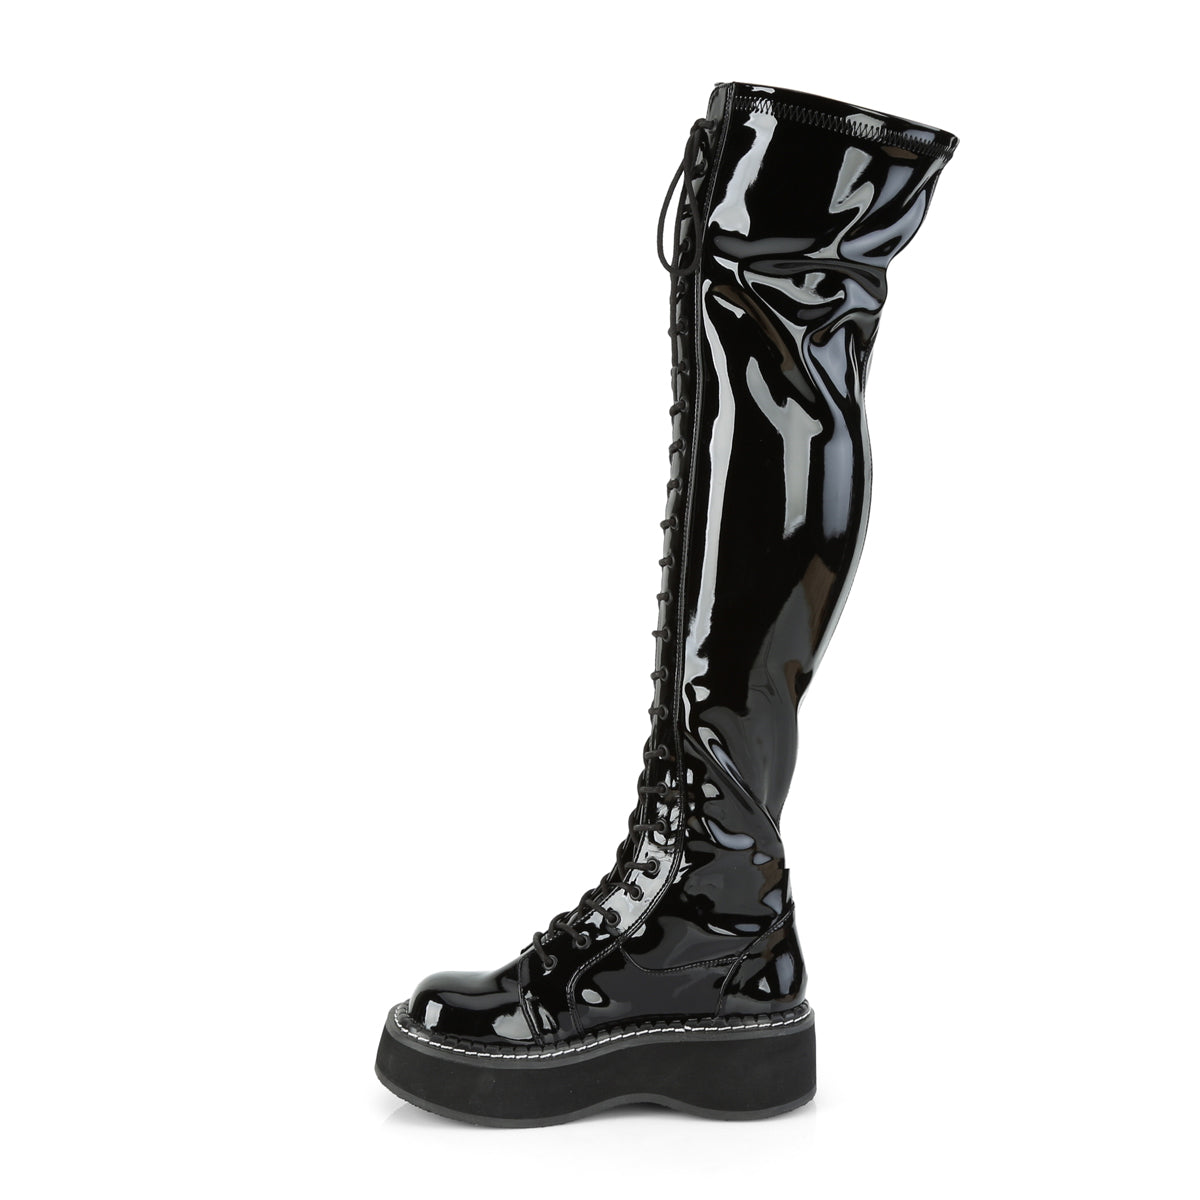 EMILY-375 Demonia Black Patent Women's Over-the-Knee Boots [Demonia Cult Alternative Footwear]